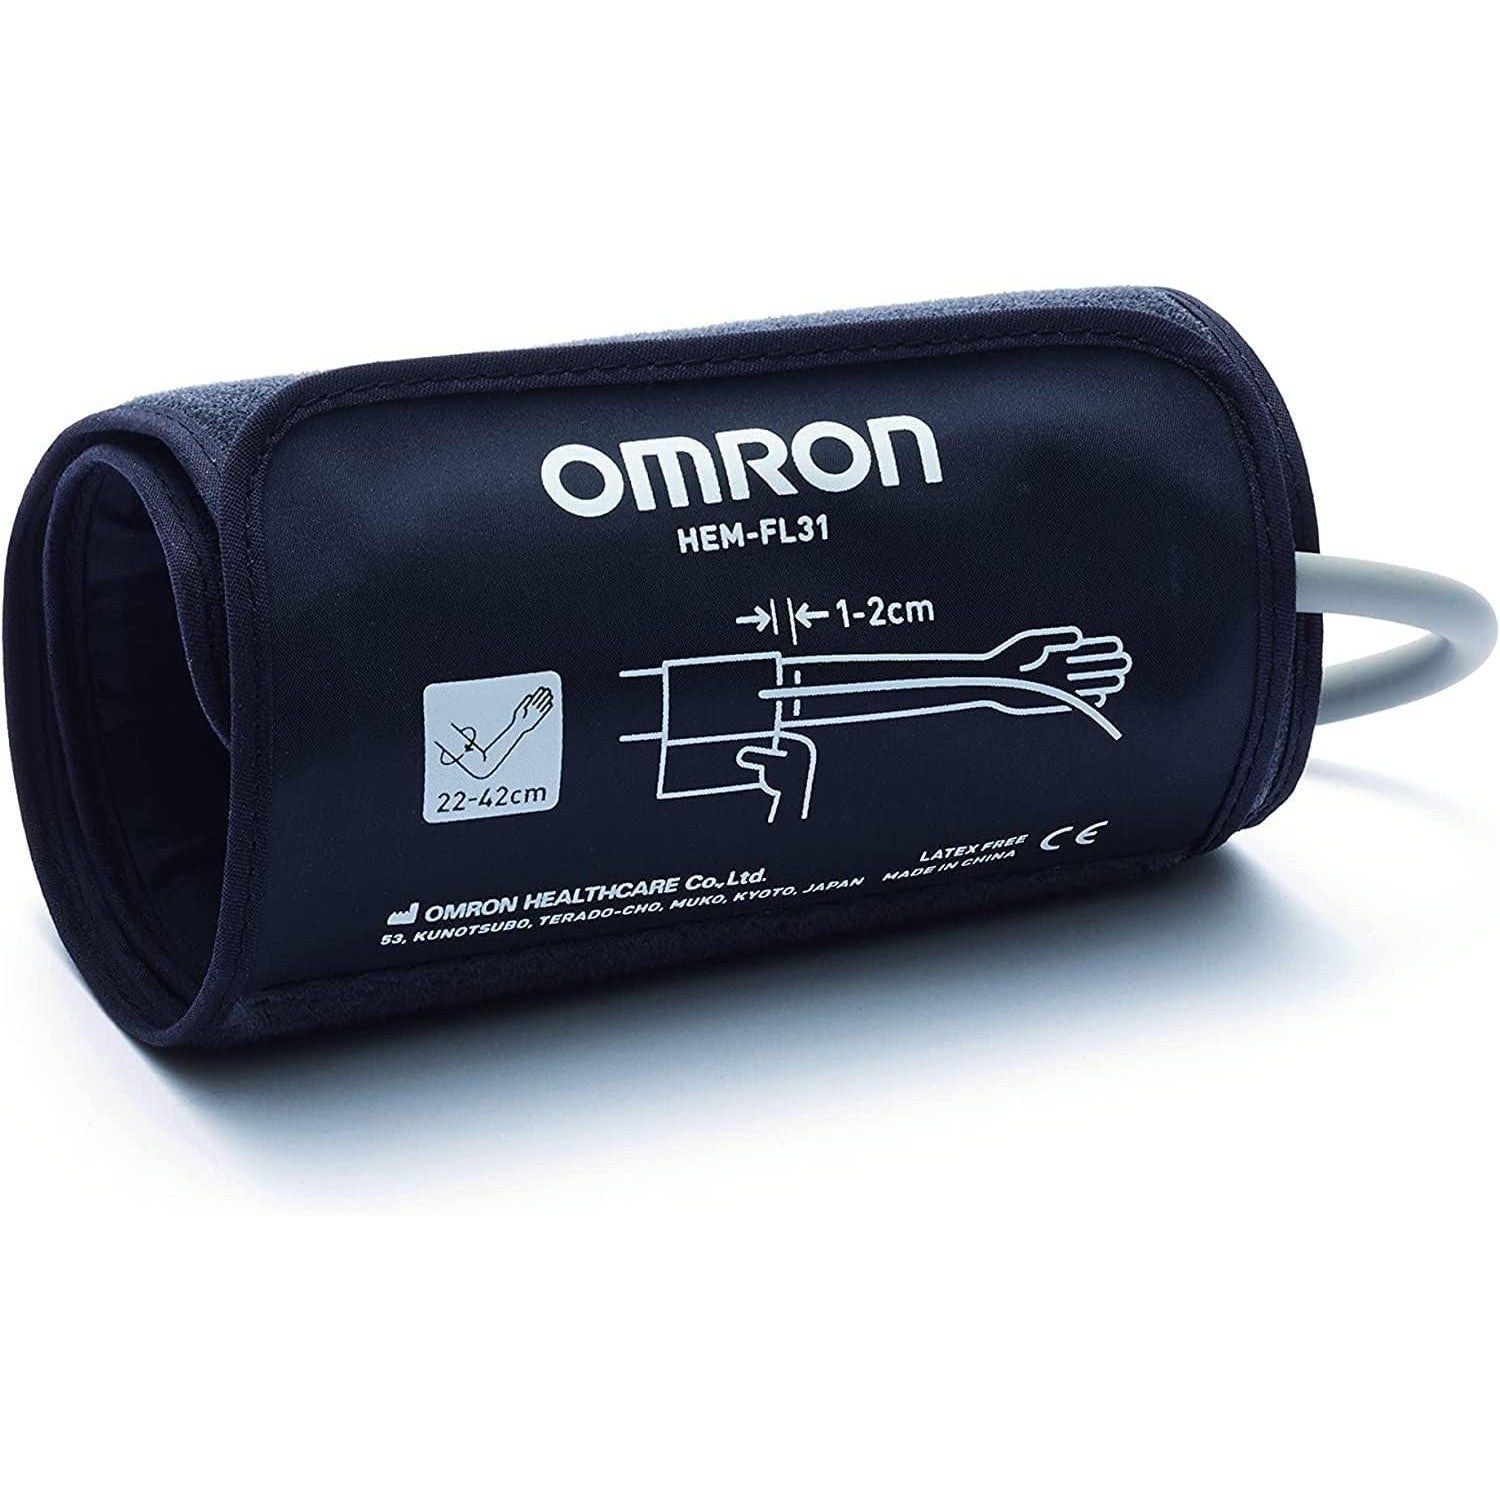 OMRON Intelli Wrap Cuff  (22 - 42 cm) HEM-FL31-E for OMRON Upper Arm Blood Pressure Monitors